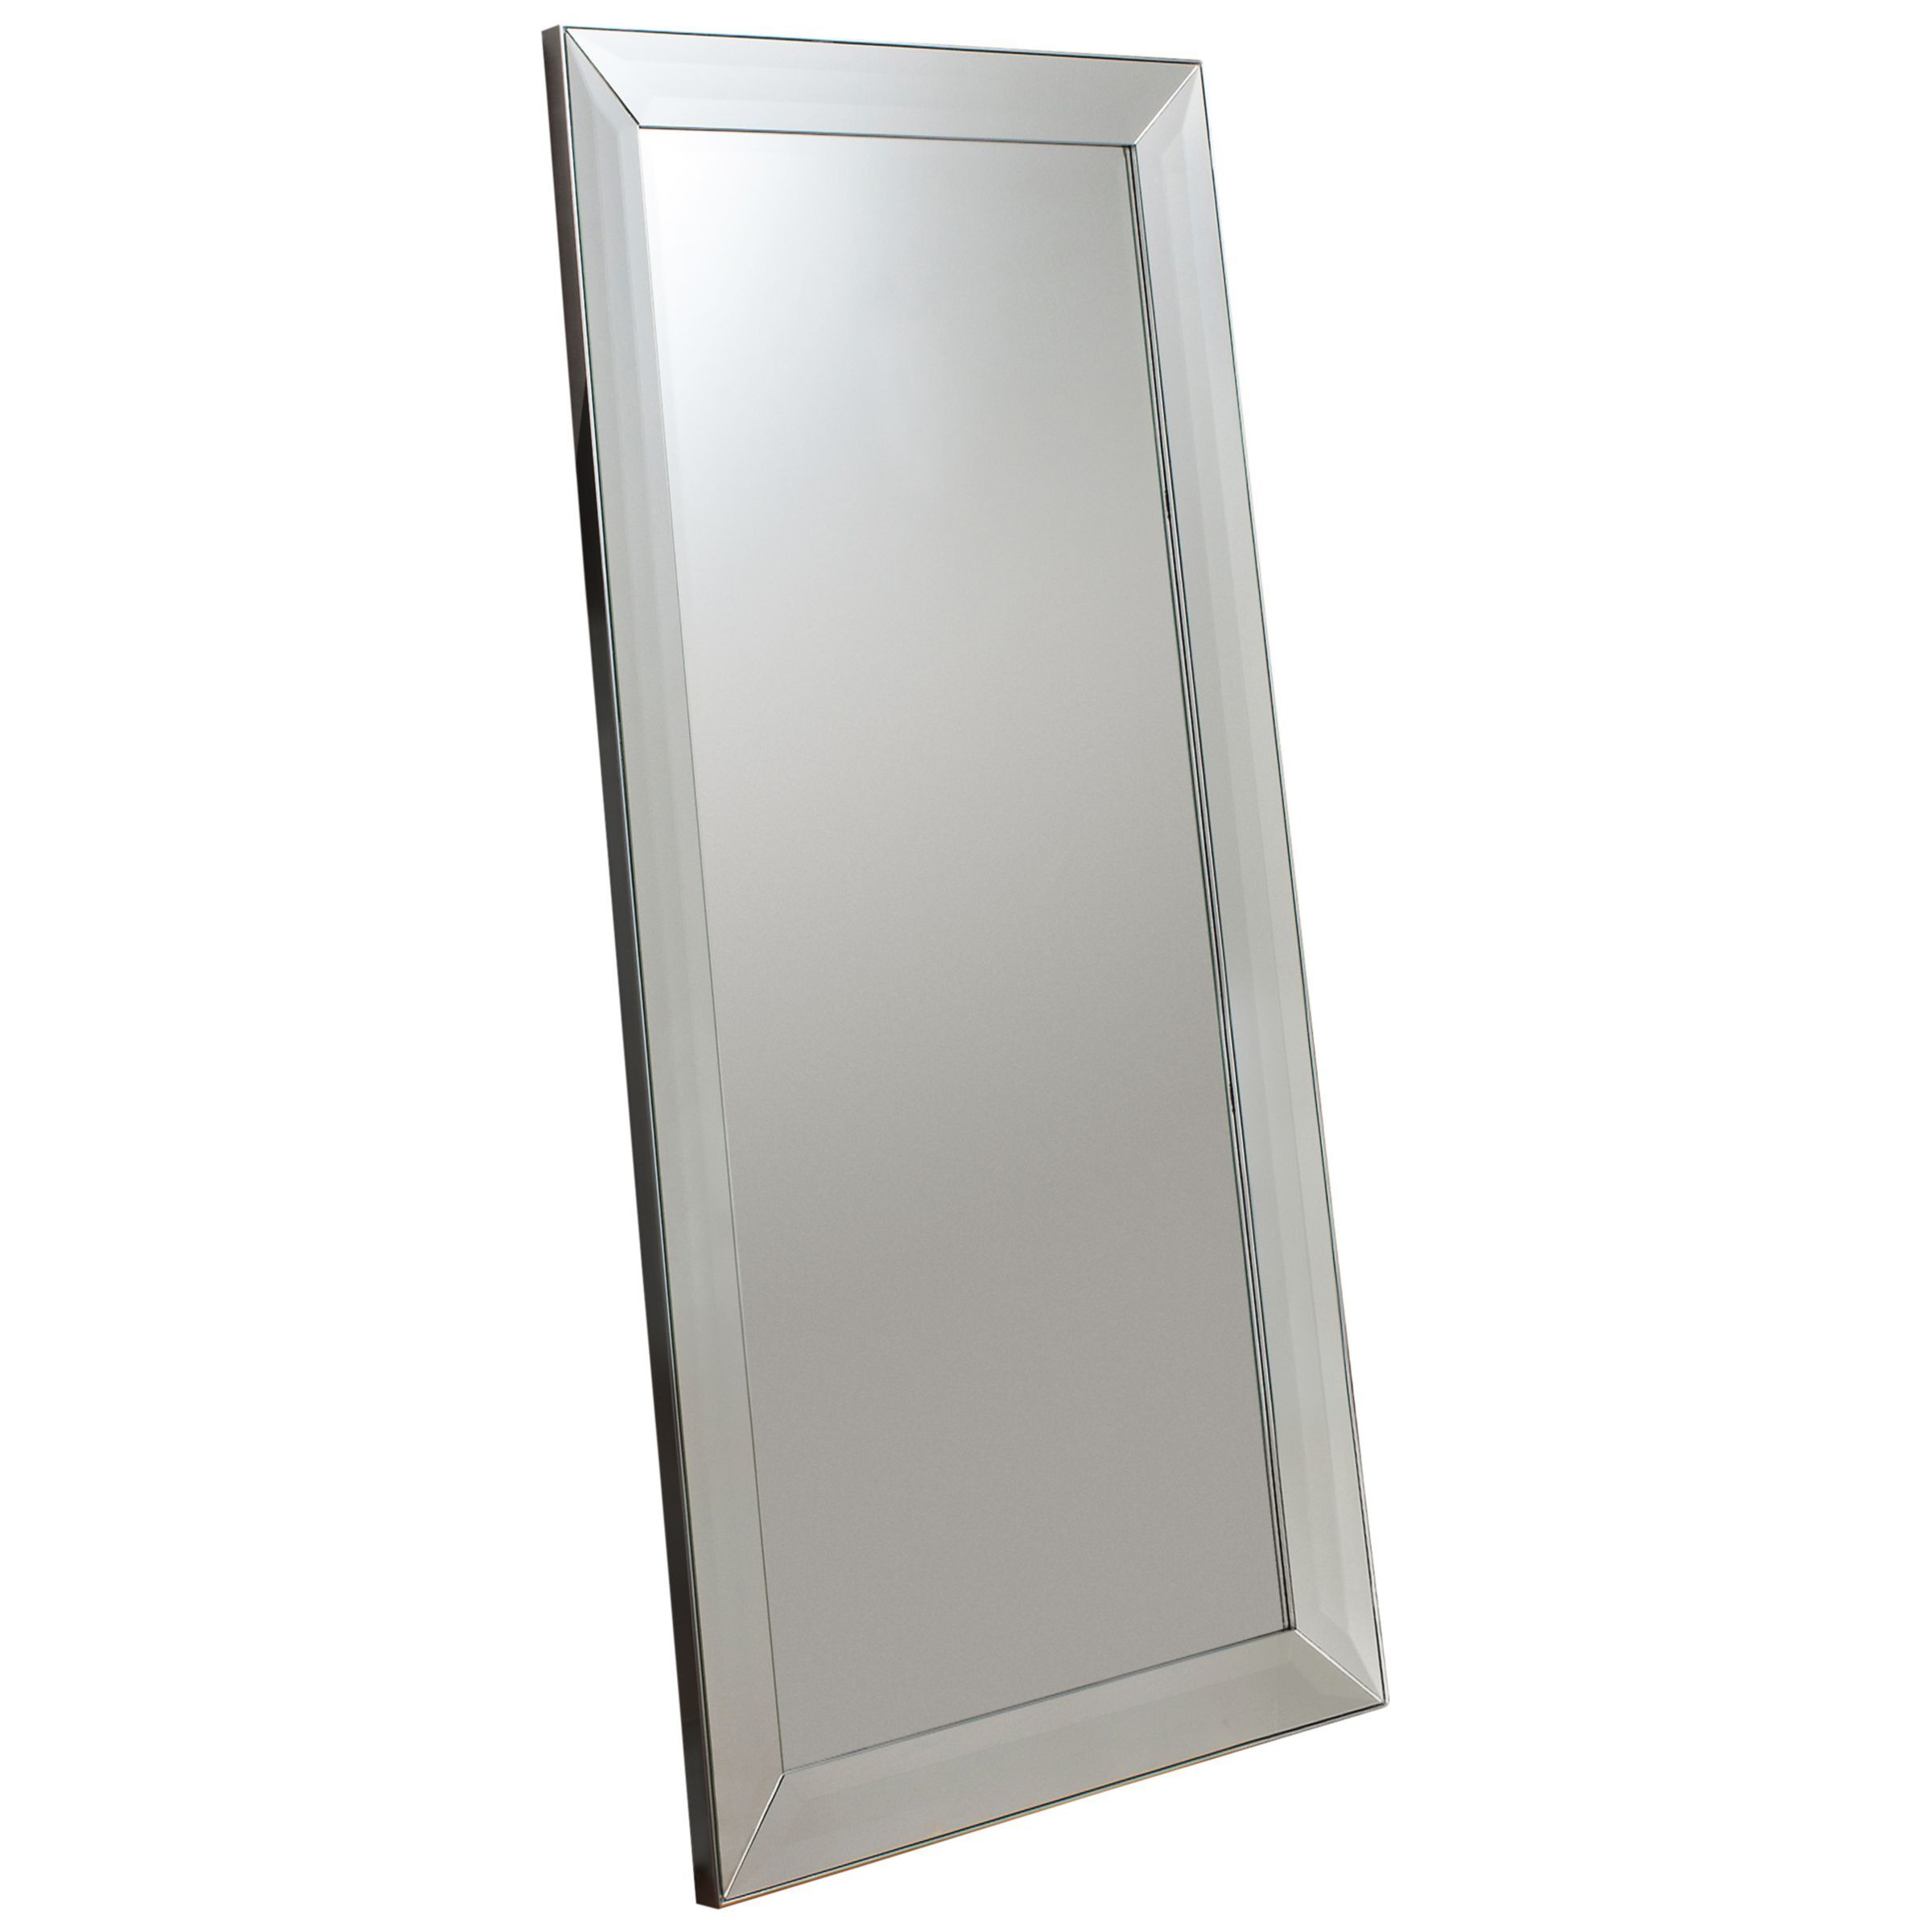 Gallery Direct Modena Rectangular Leaner Mirror, Silver, 165 x 78.5cm - image 1